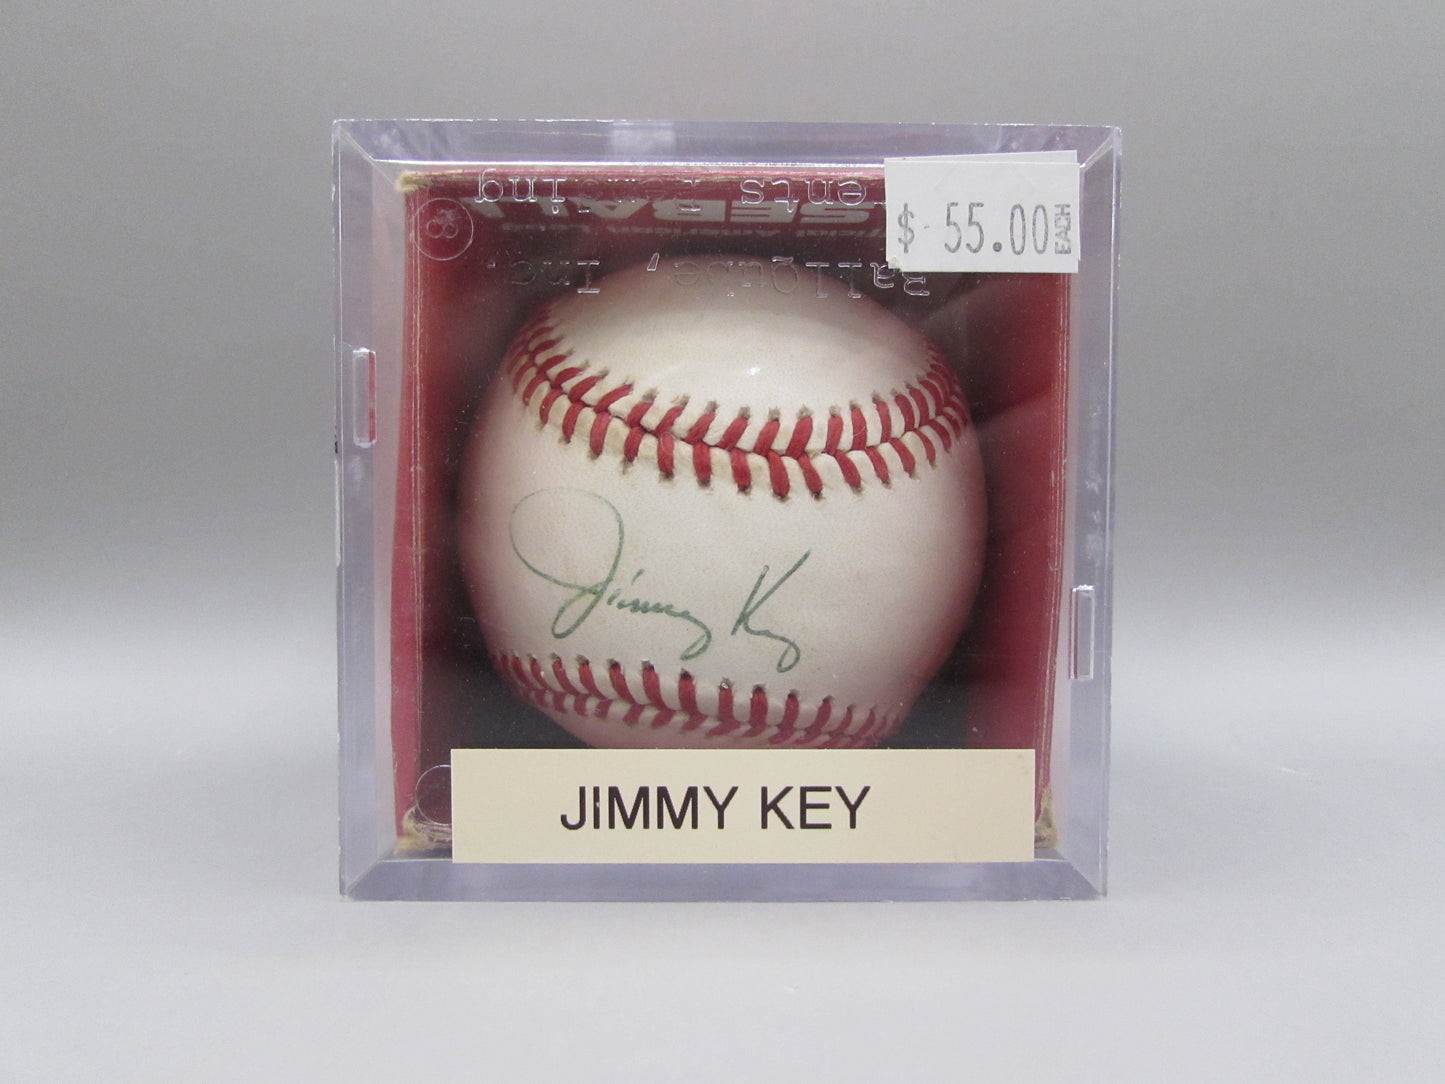 Jimmy Key signed baseball